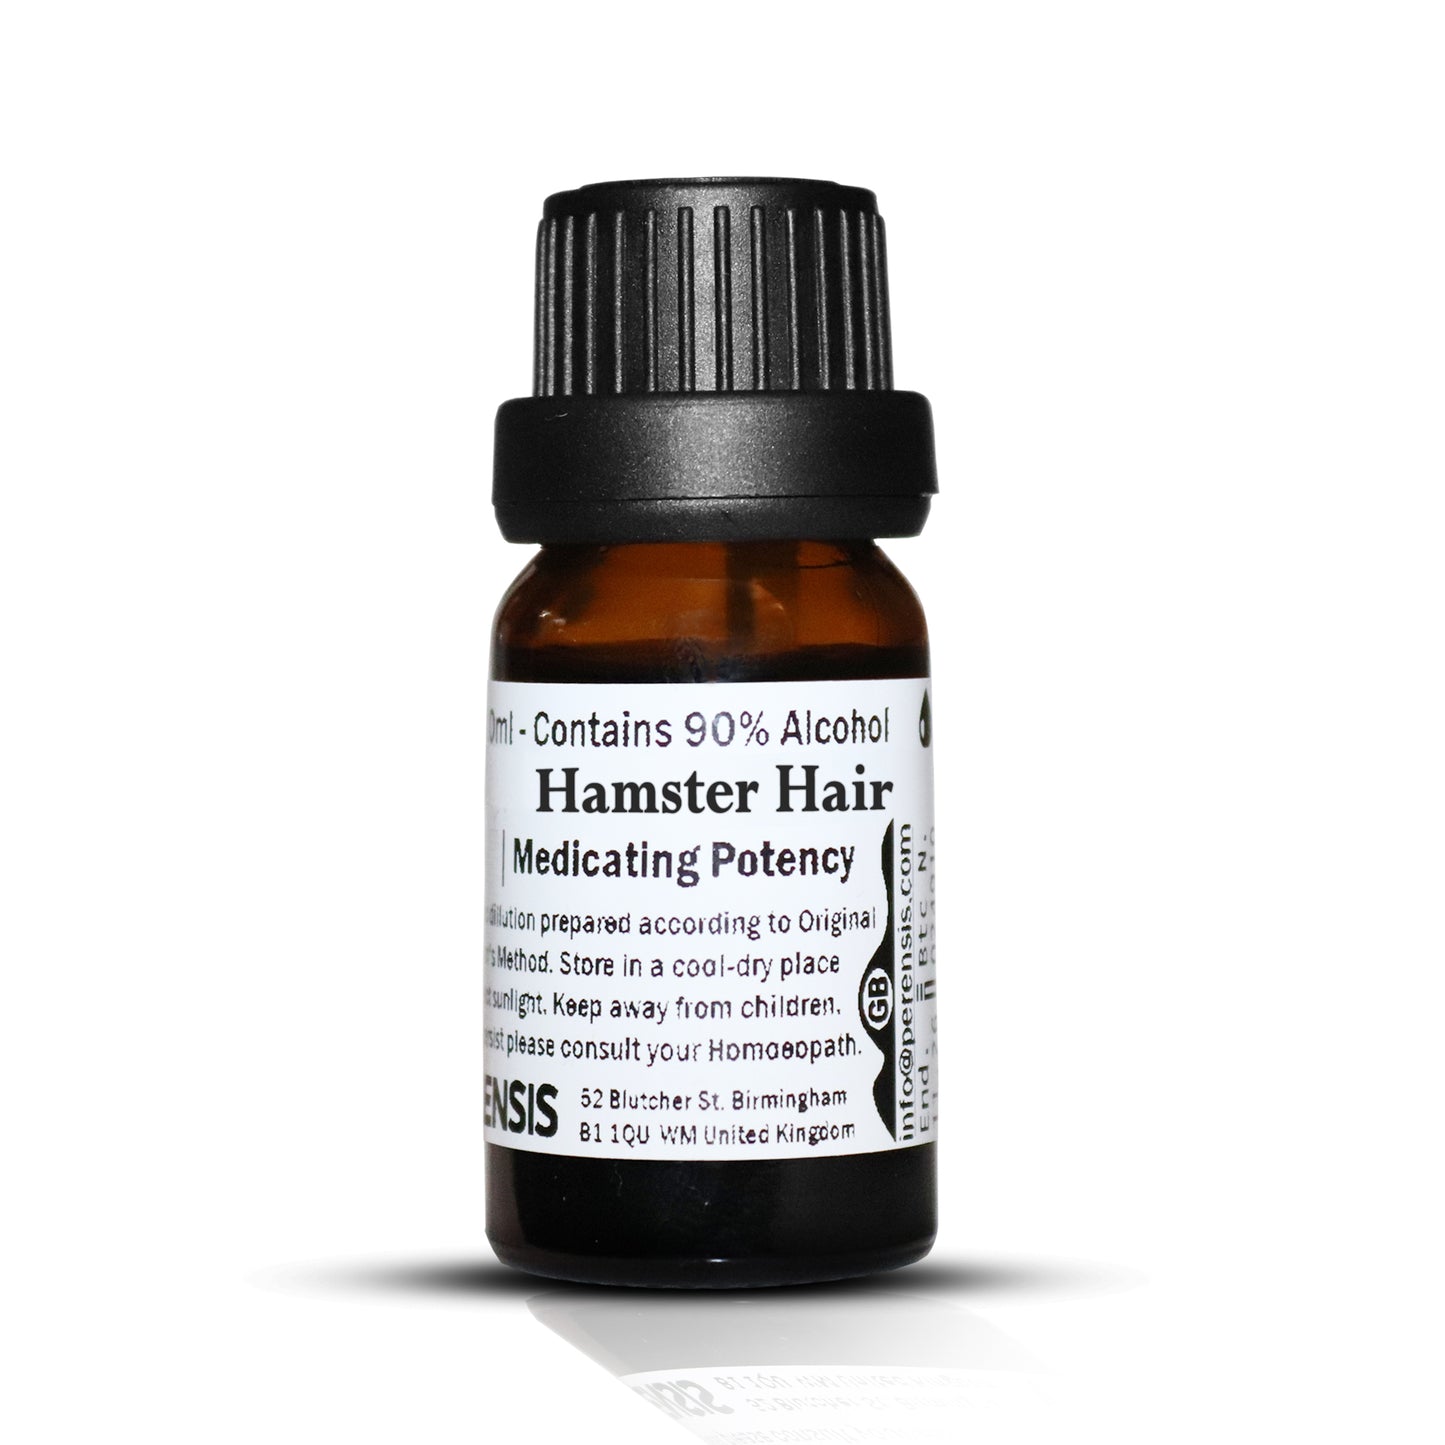 Hamster Hair